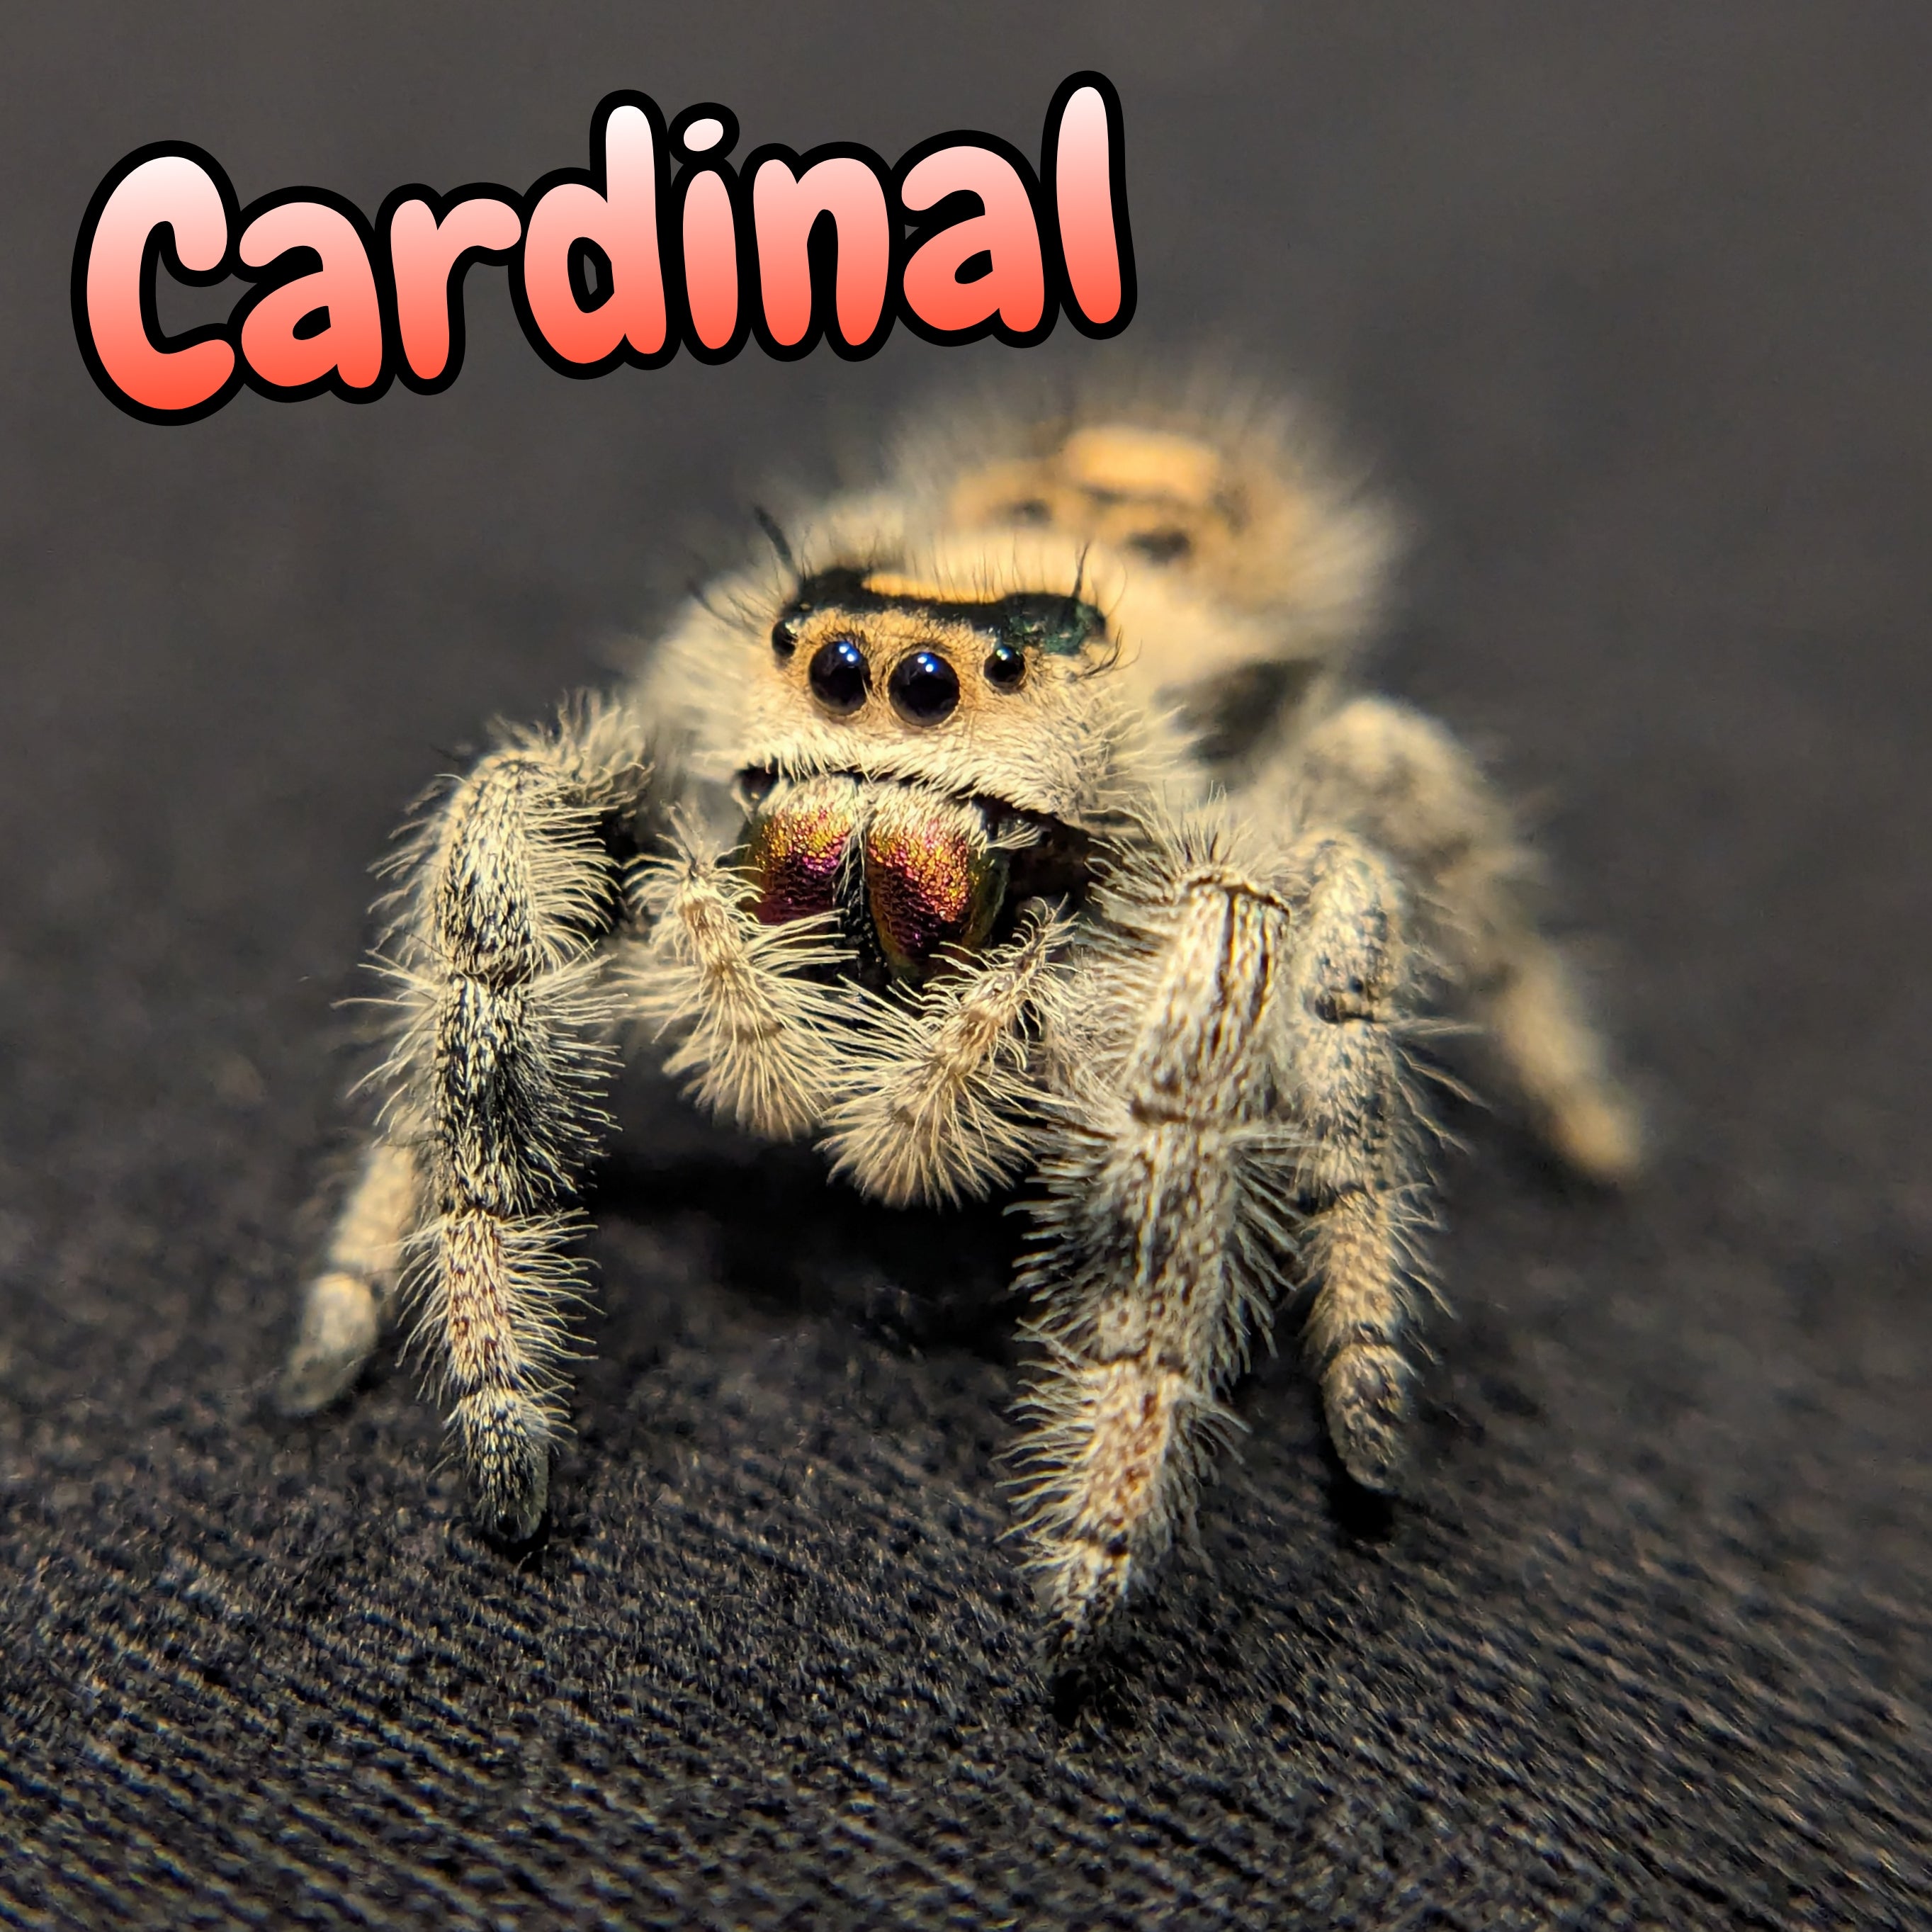 Apalachicola Regal Jumping Spider "Cardinal"